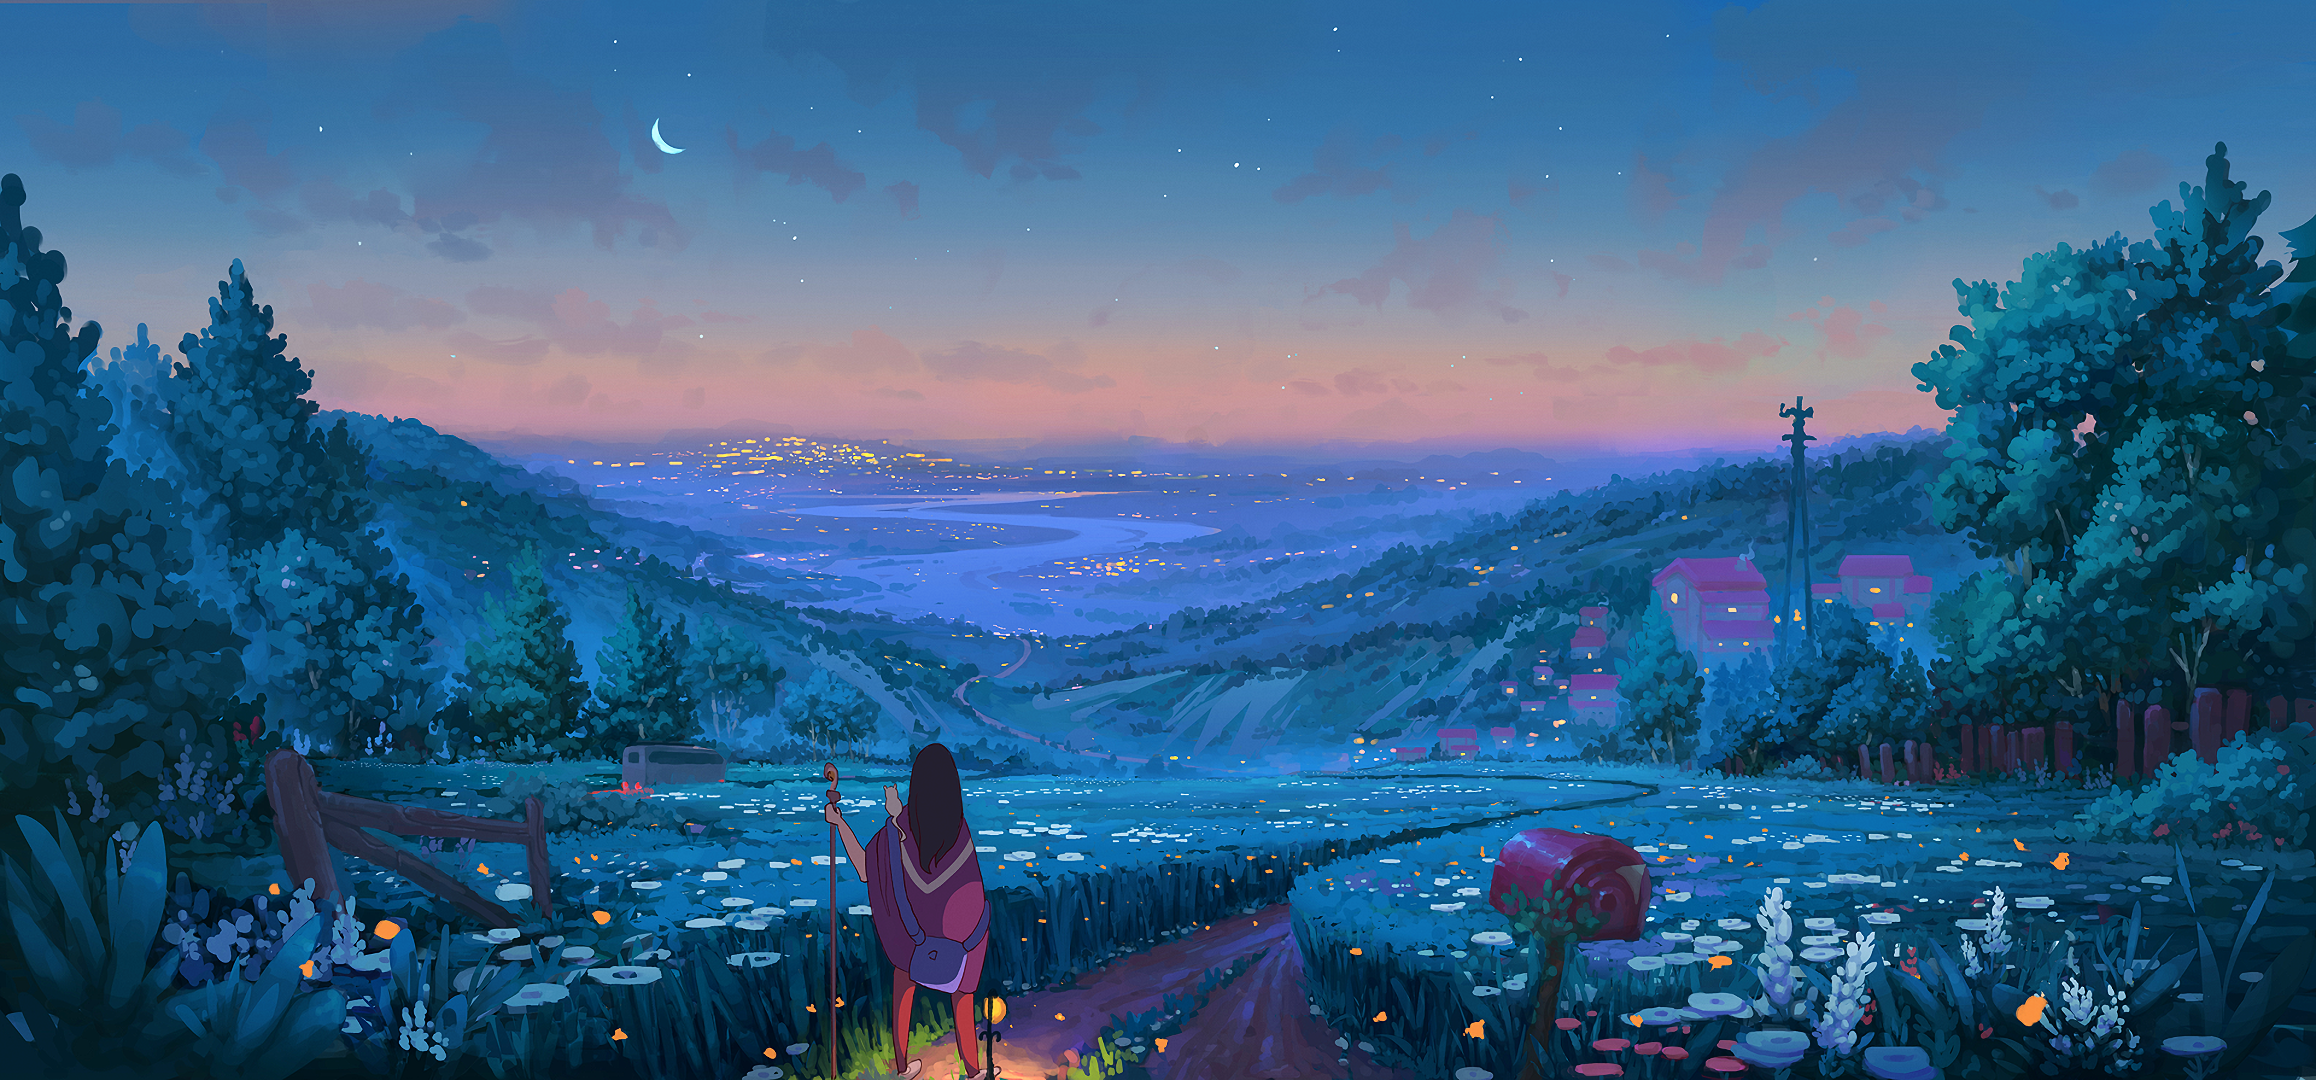 Anime Girl on Scenic Night by Gydwin